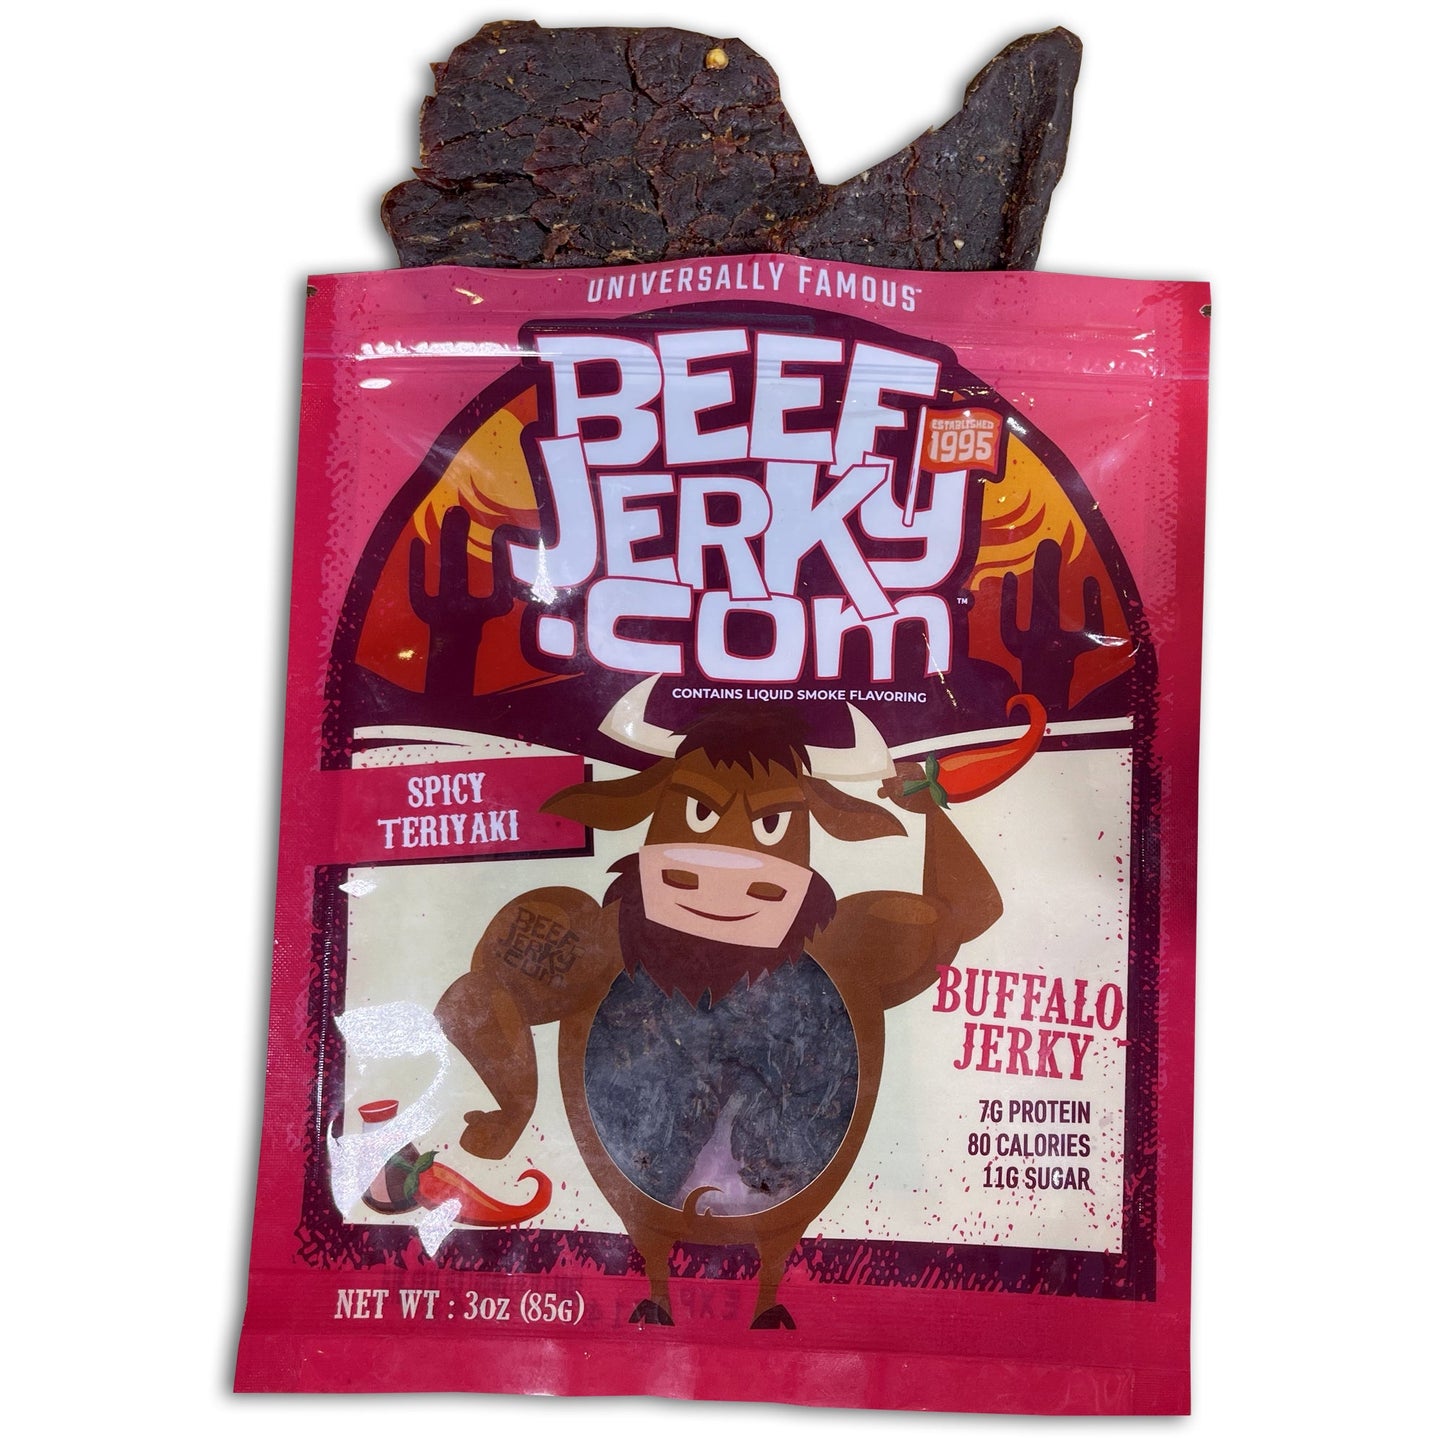 Spicy Teriyaki Buffalo Jerky (3oz bag) by BeefJerky.com